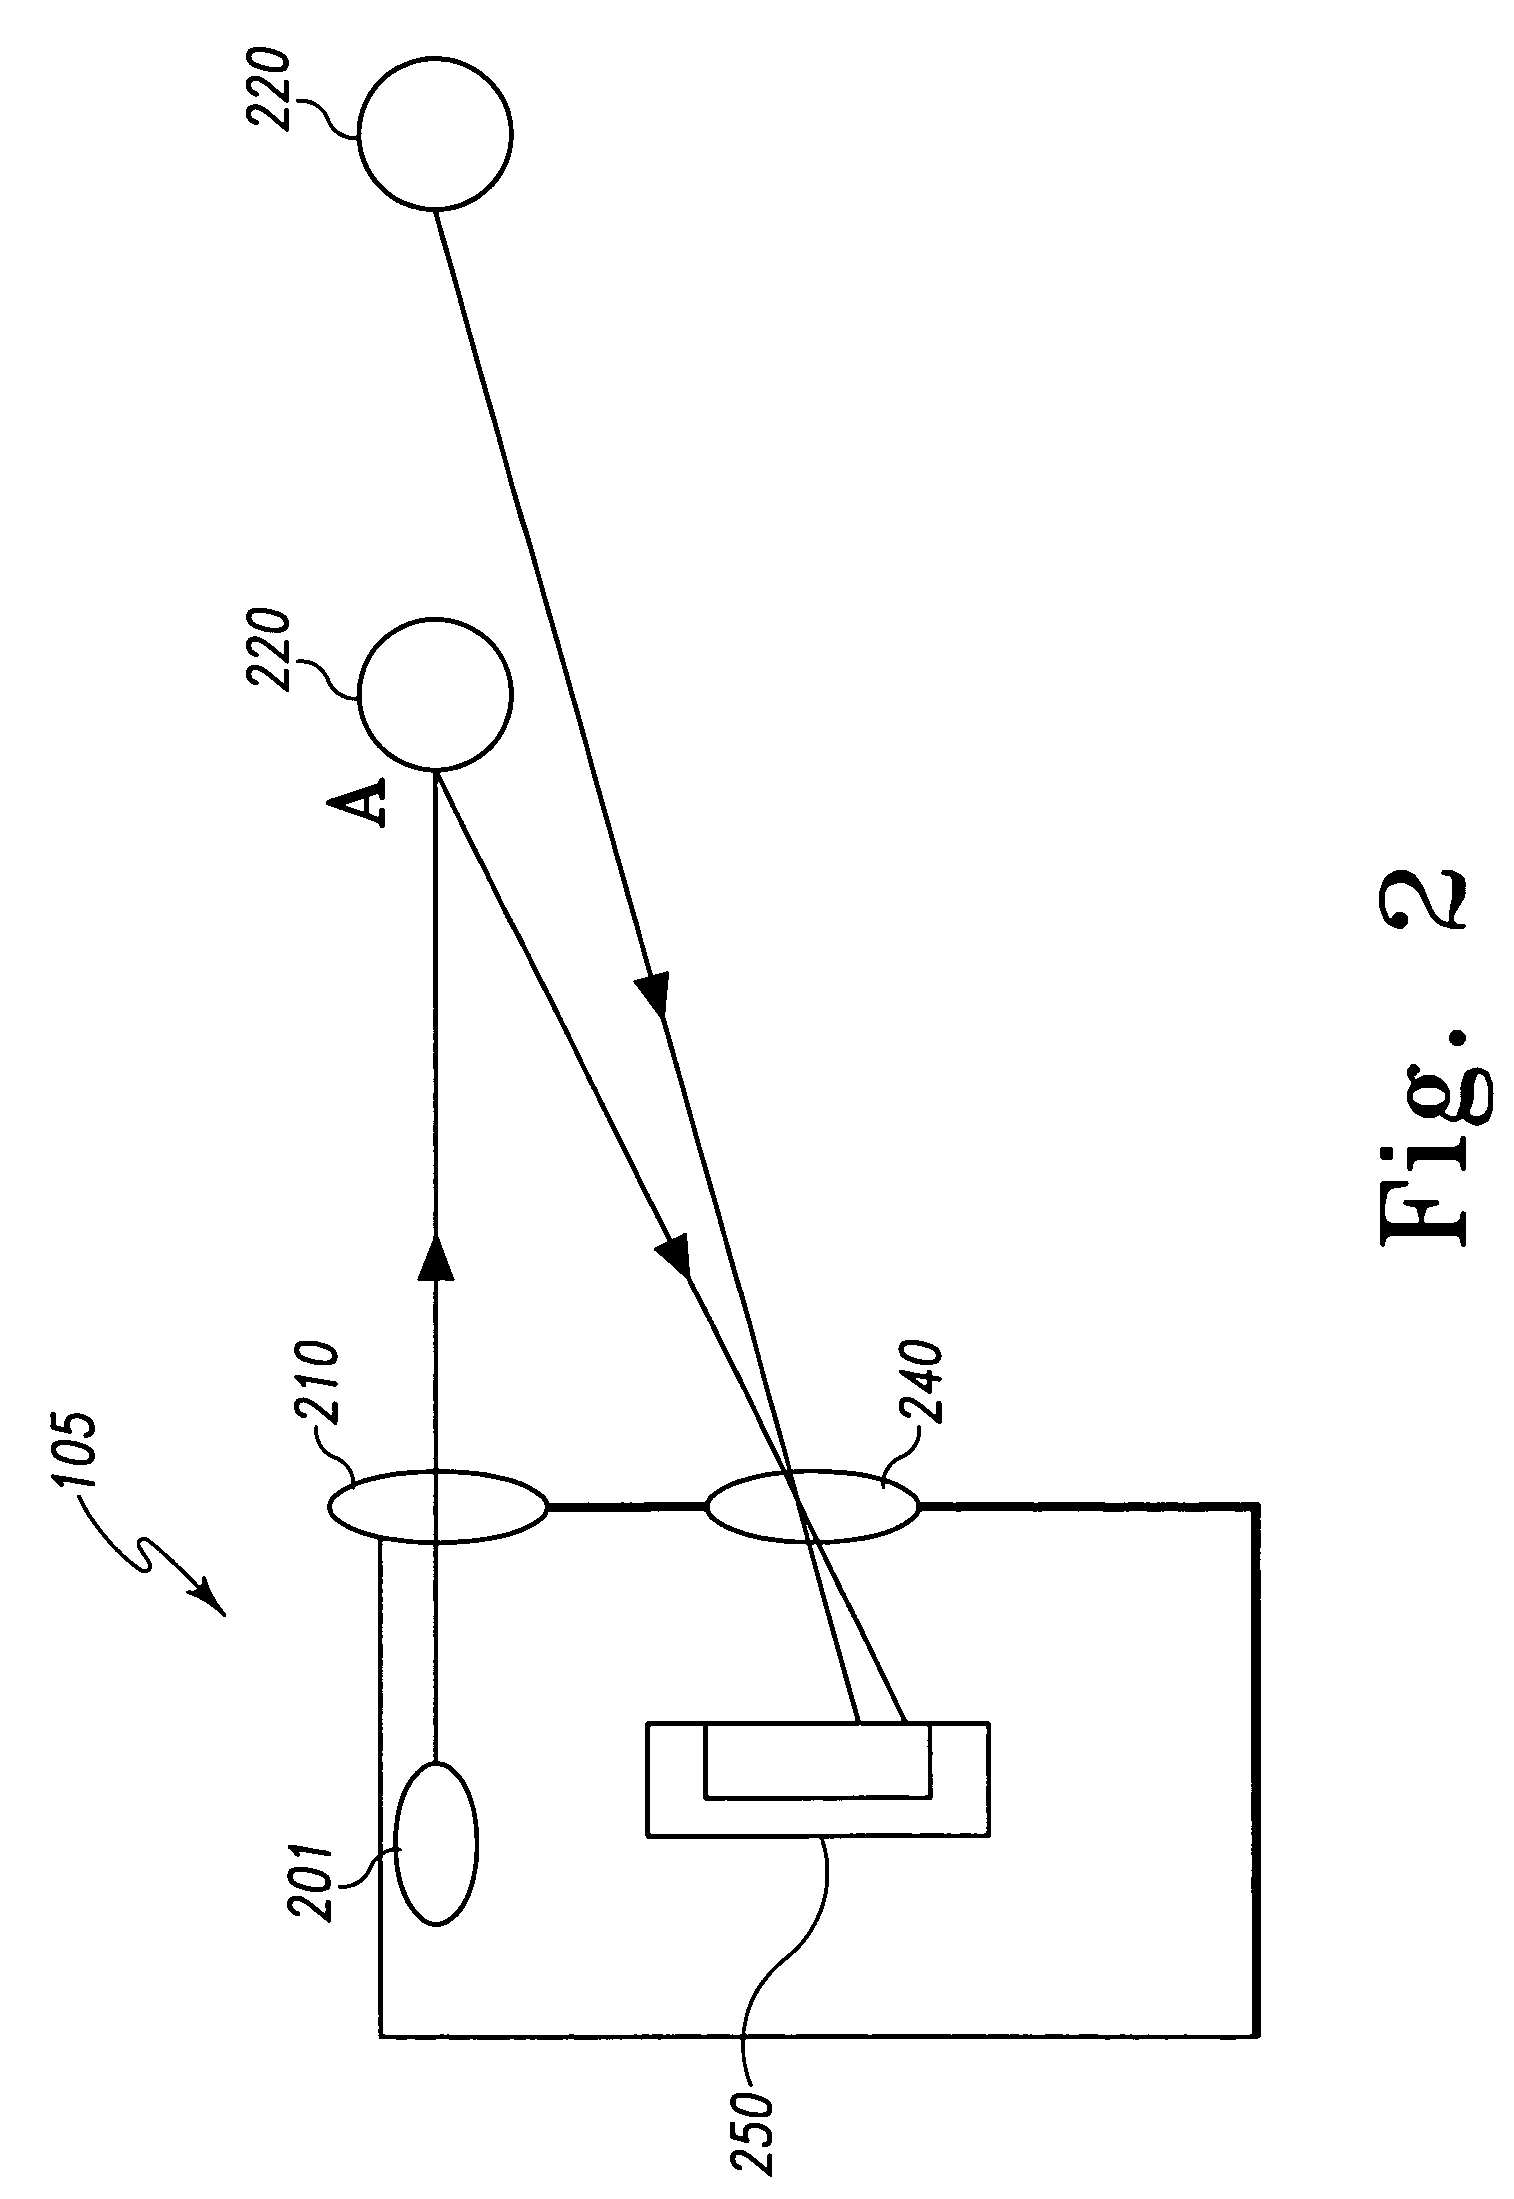 Control arrangement for an automatic residential faucet